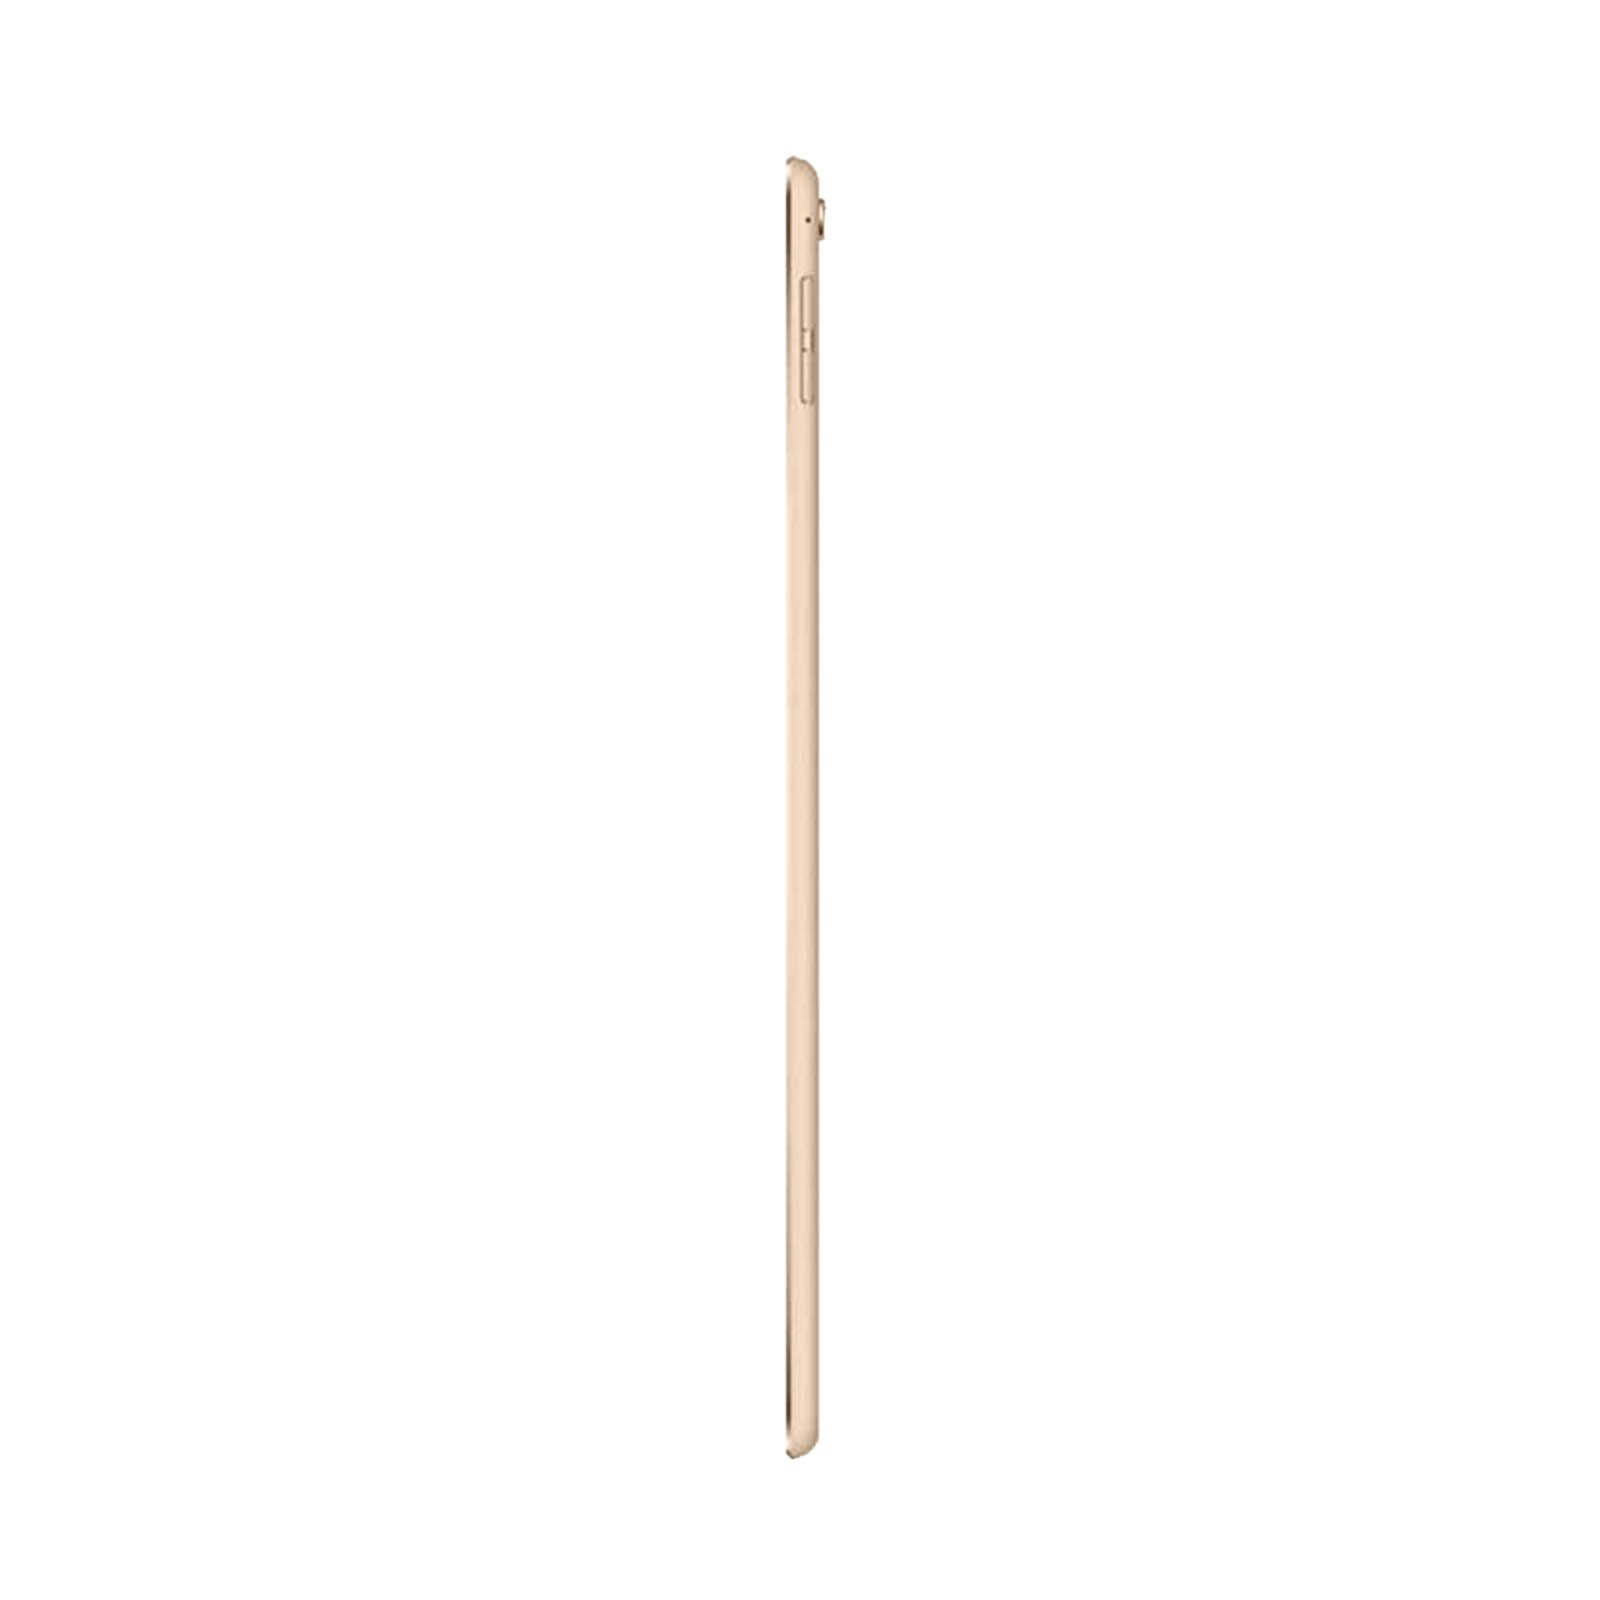 iPad Pro 9.7 Inch 256GB Gold Good - Unlocked